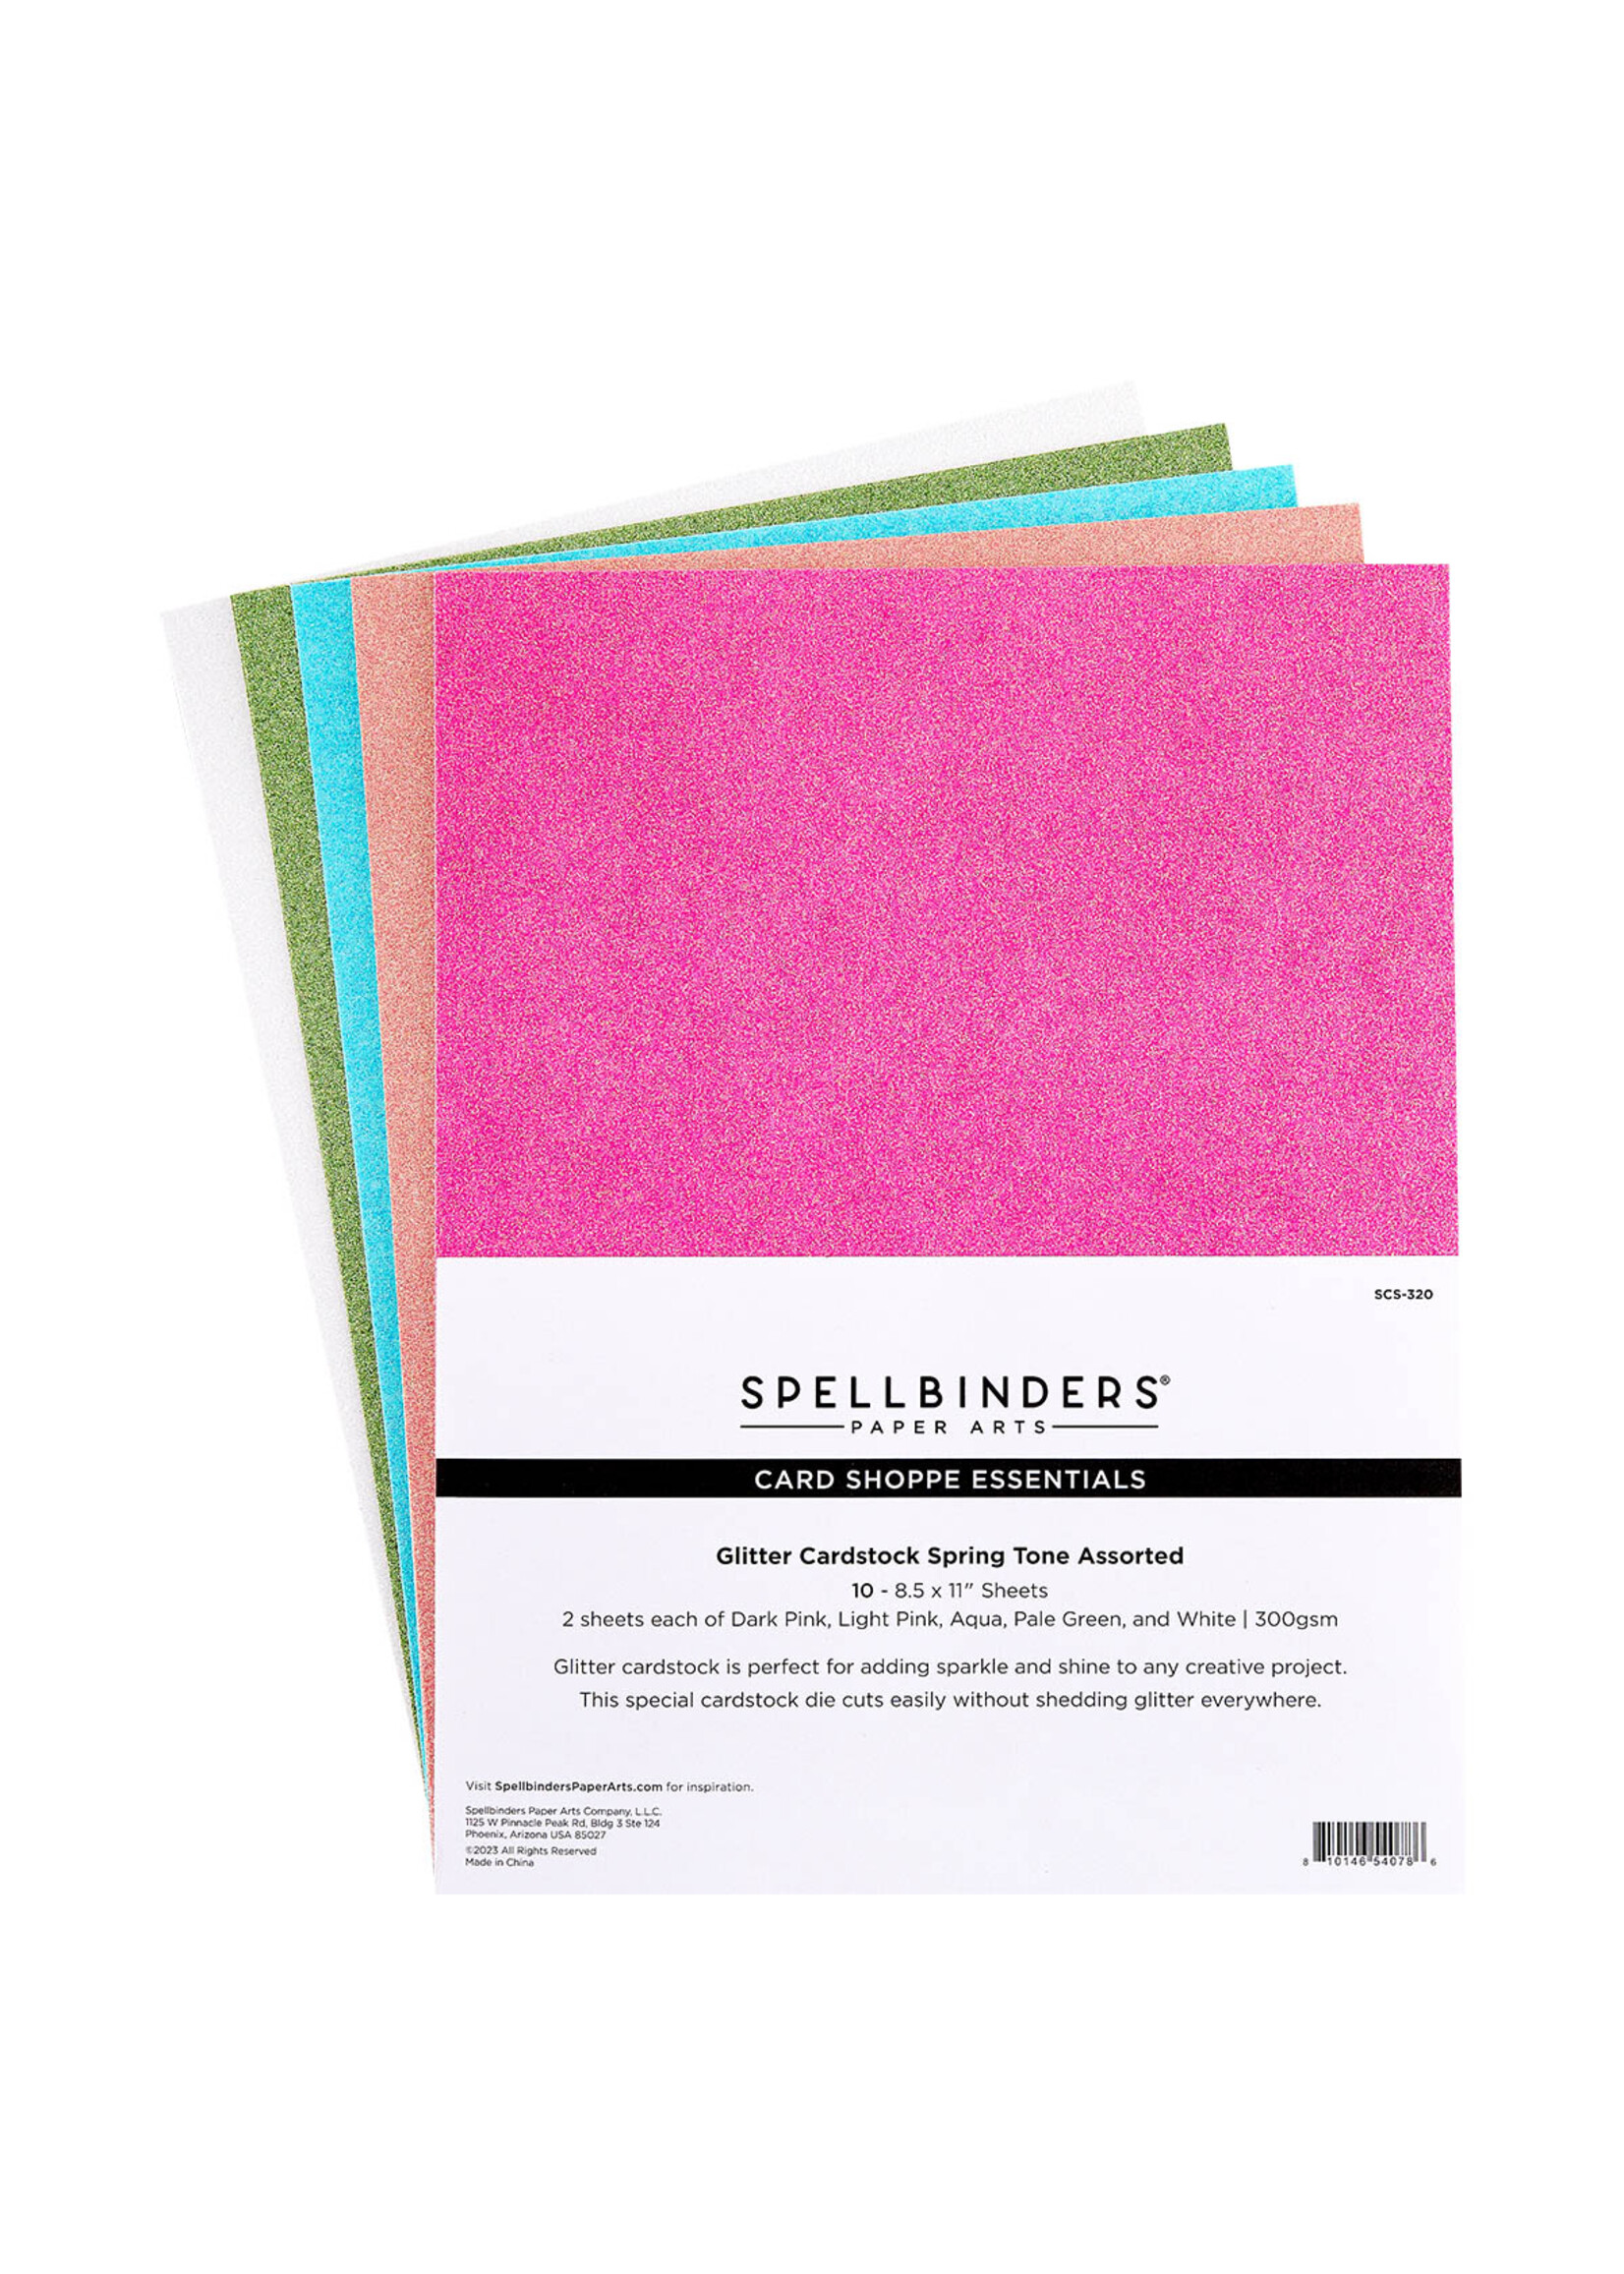 spellbinders Glitter Cardstock Spring Tone Assorted